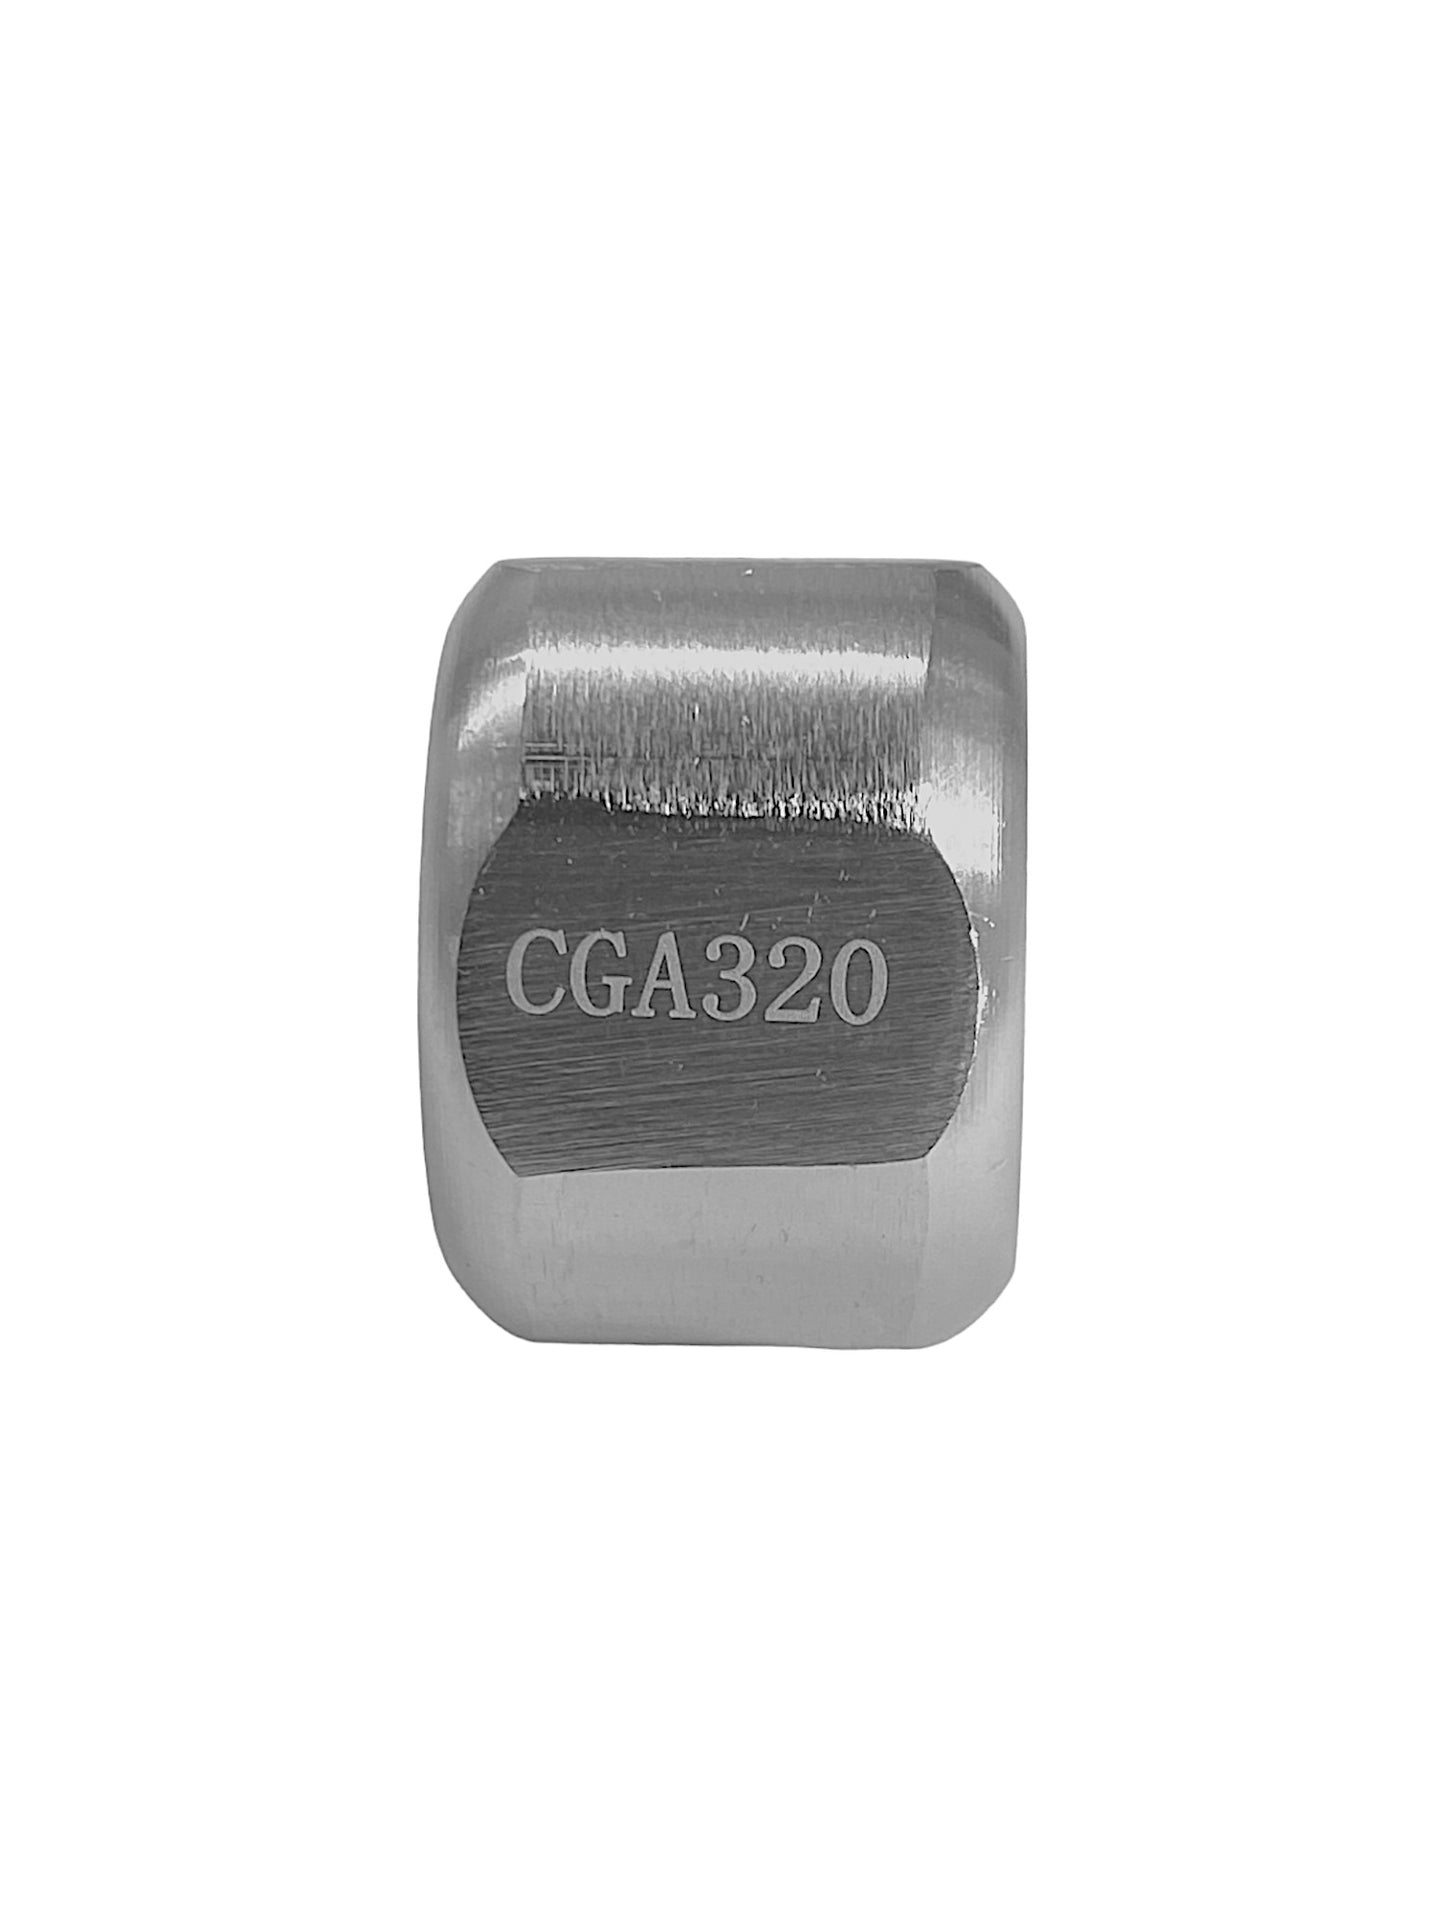 Aquarium CO2 Stainless Steel Regulator Nut Connector CGA320